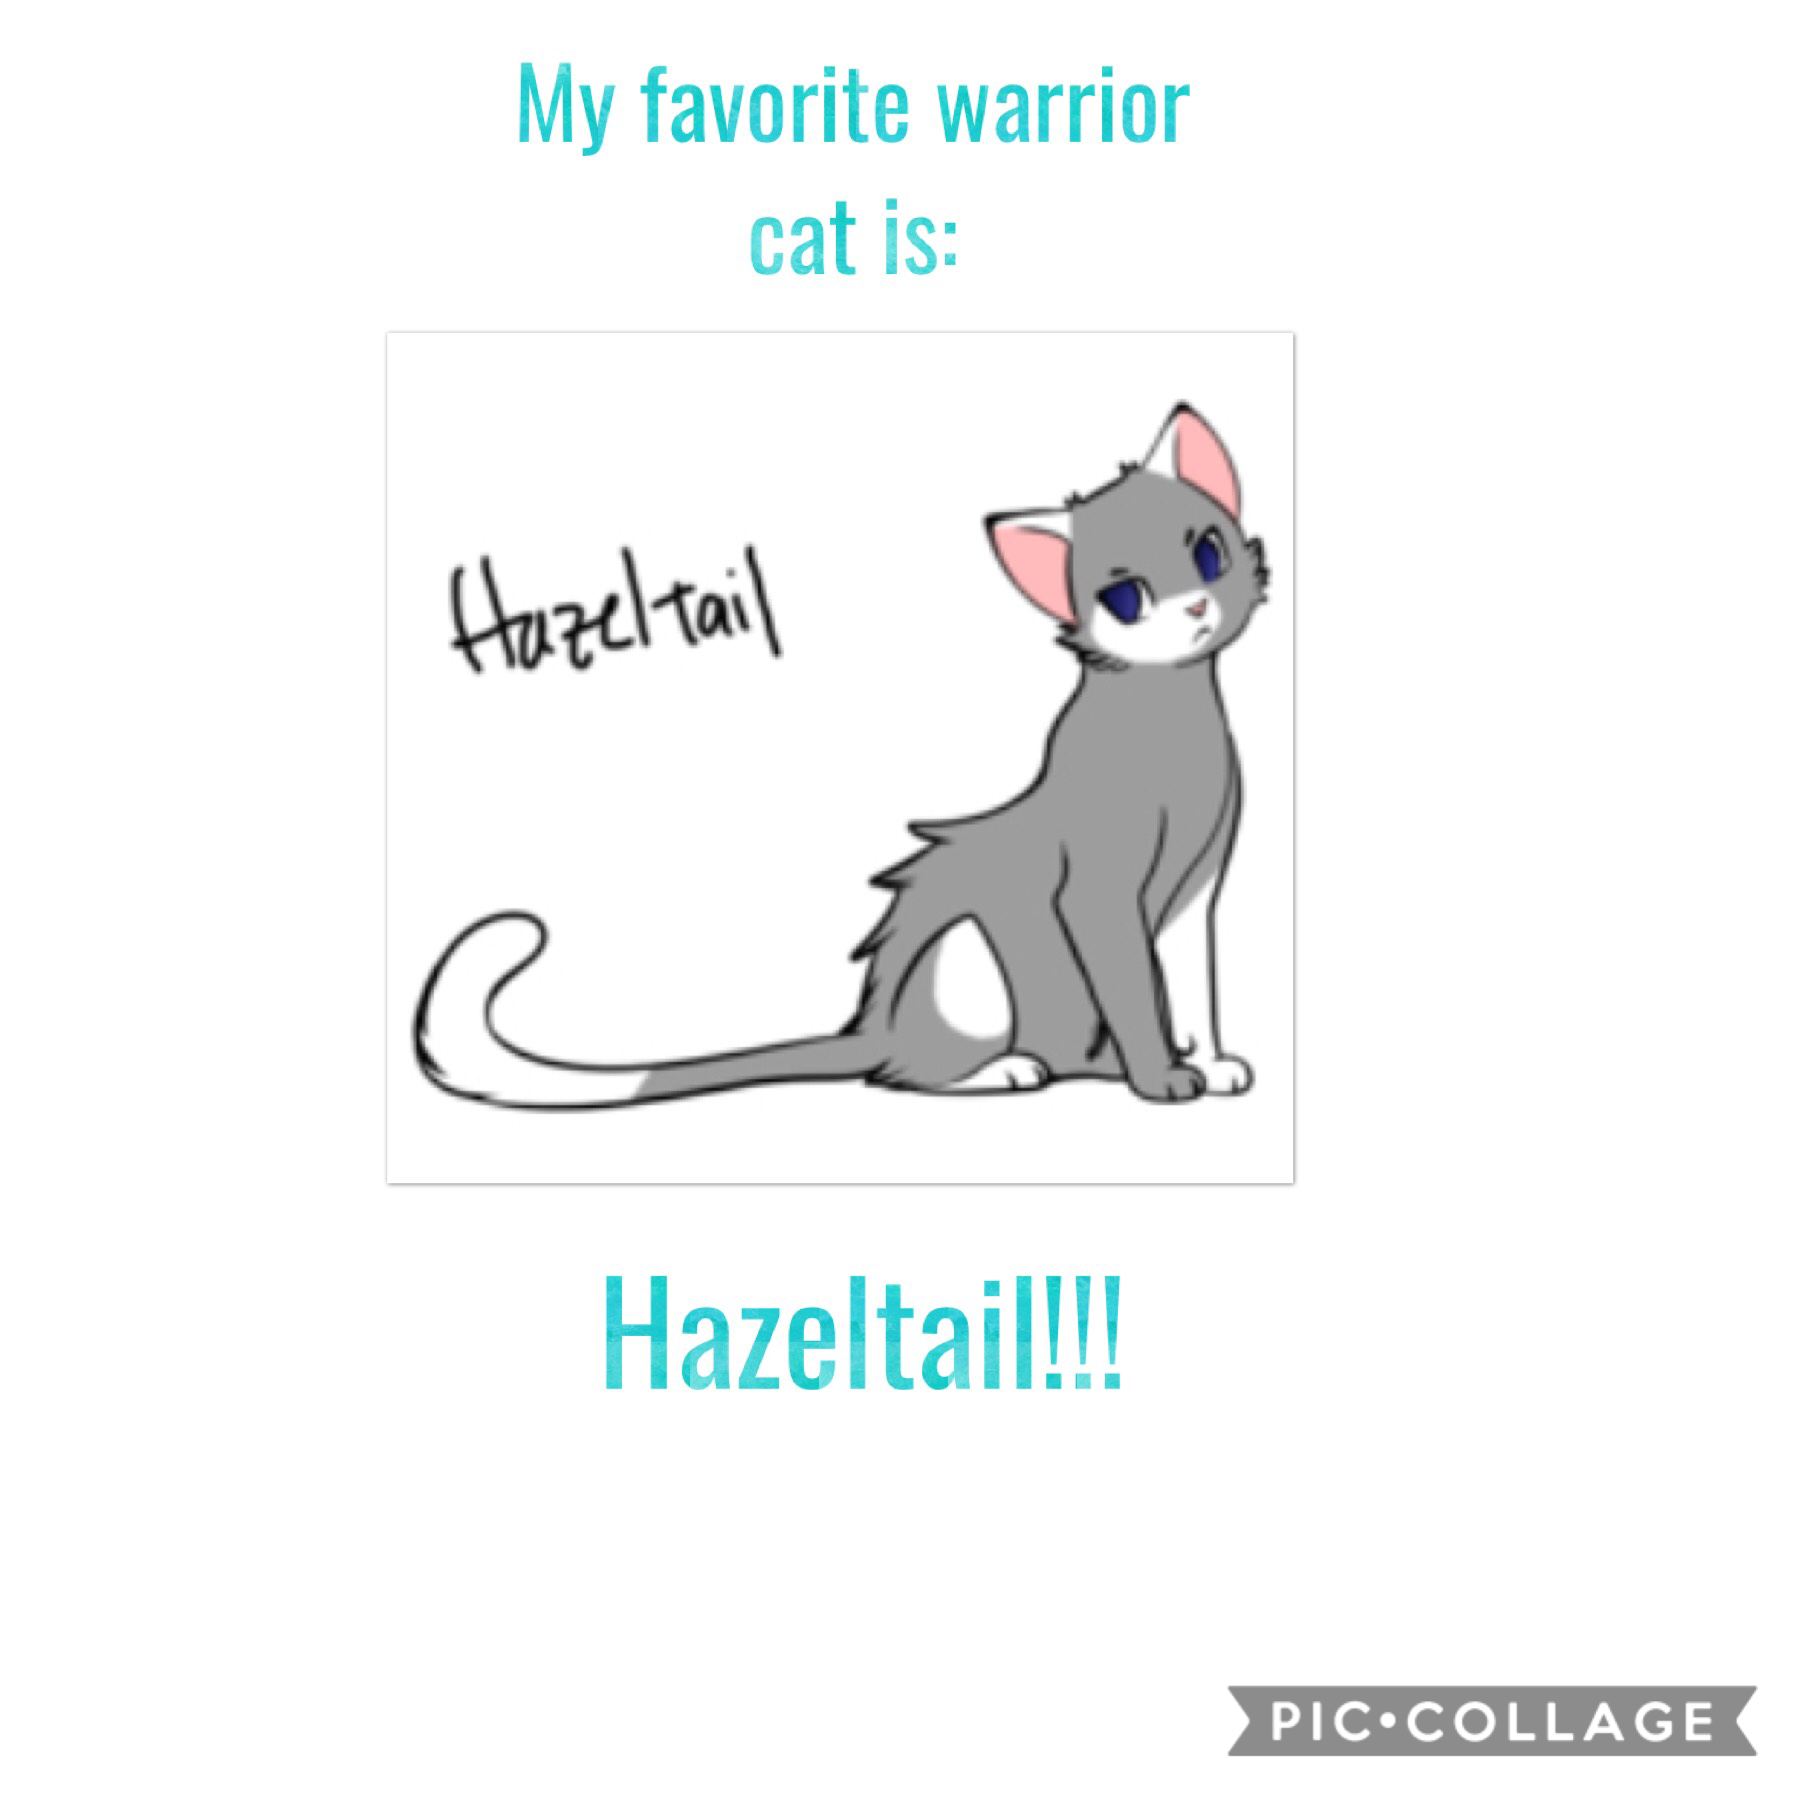 I love Hazeltail